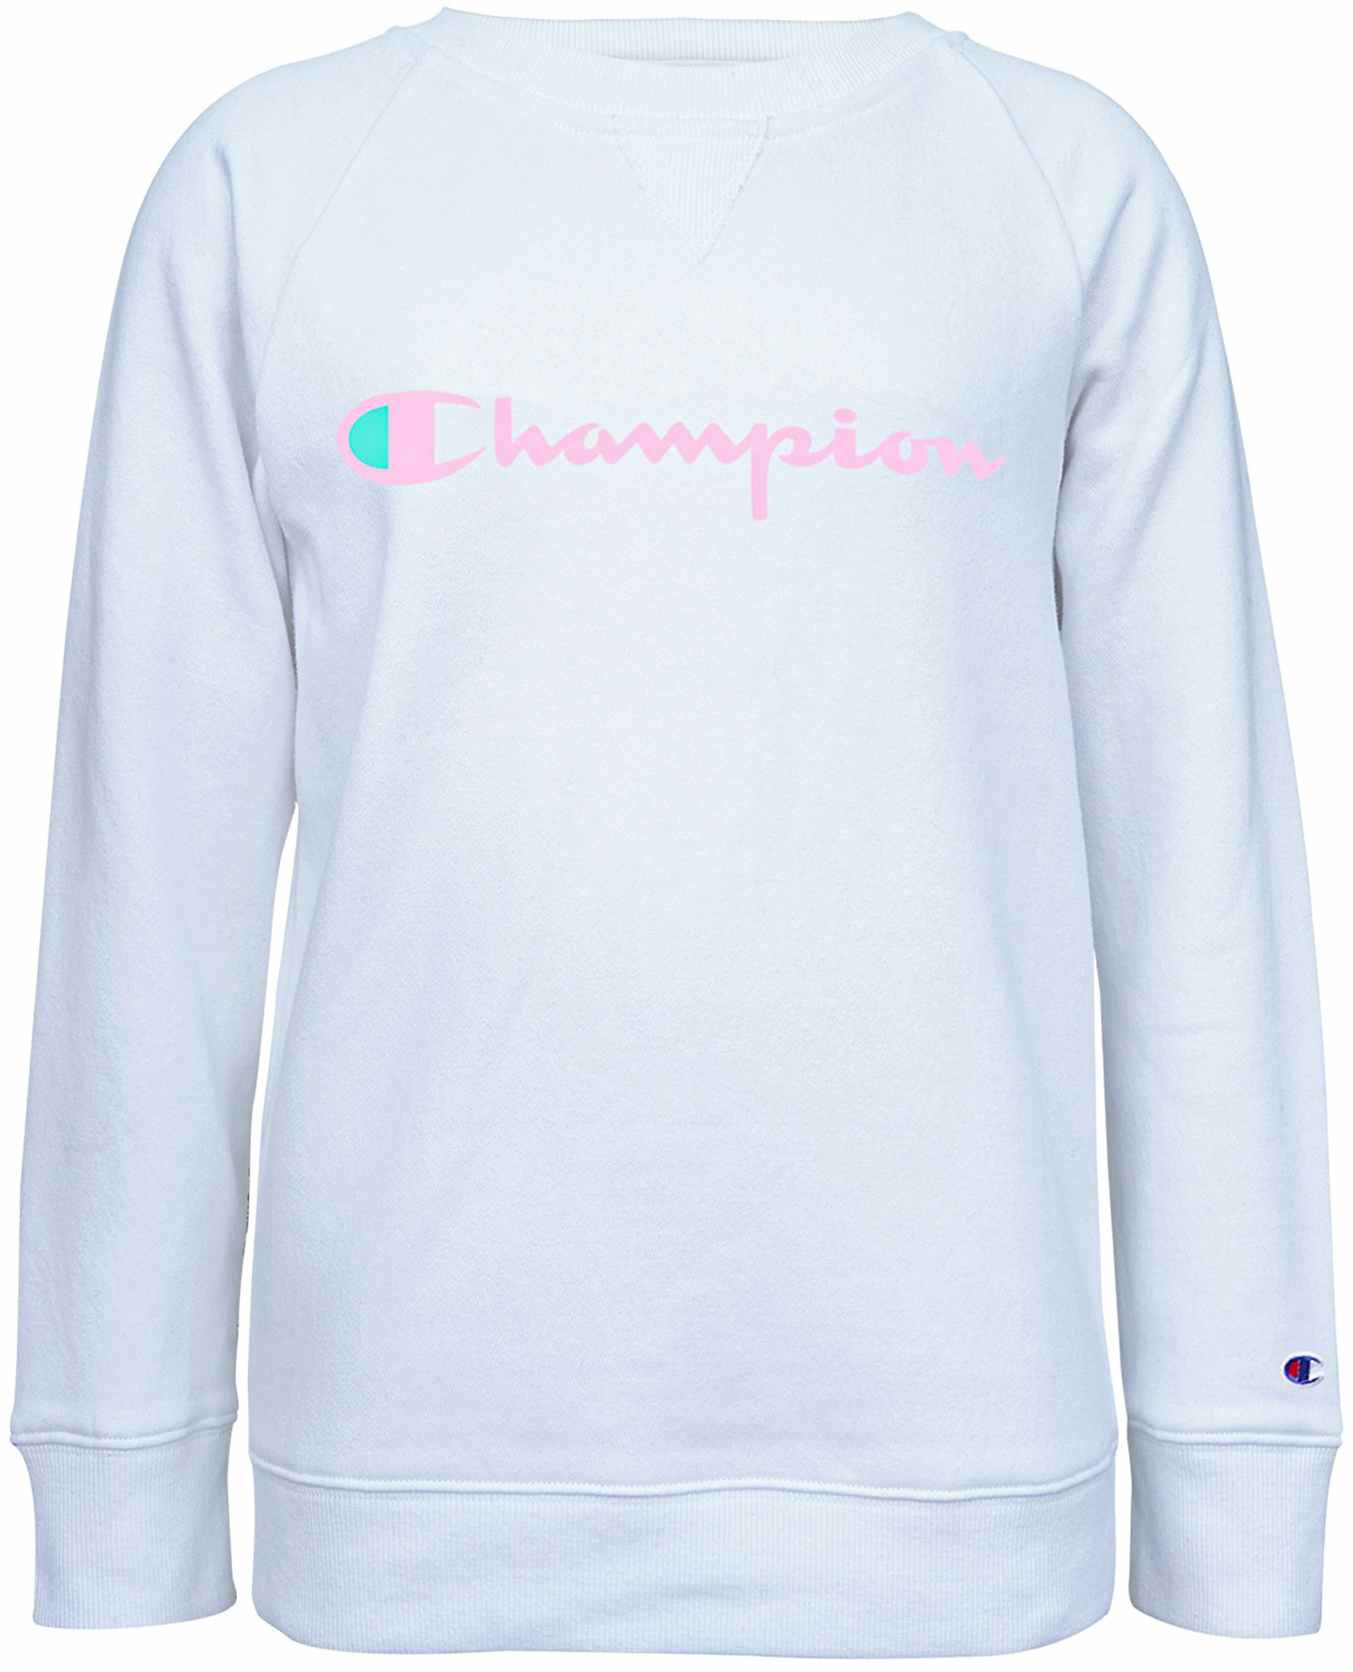 walmart-champion-girls-sweatshirt-2022